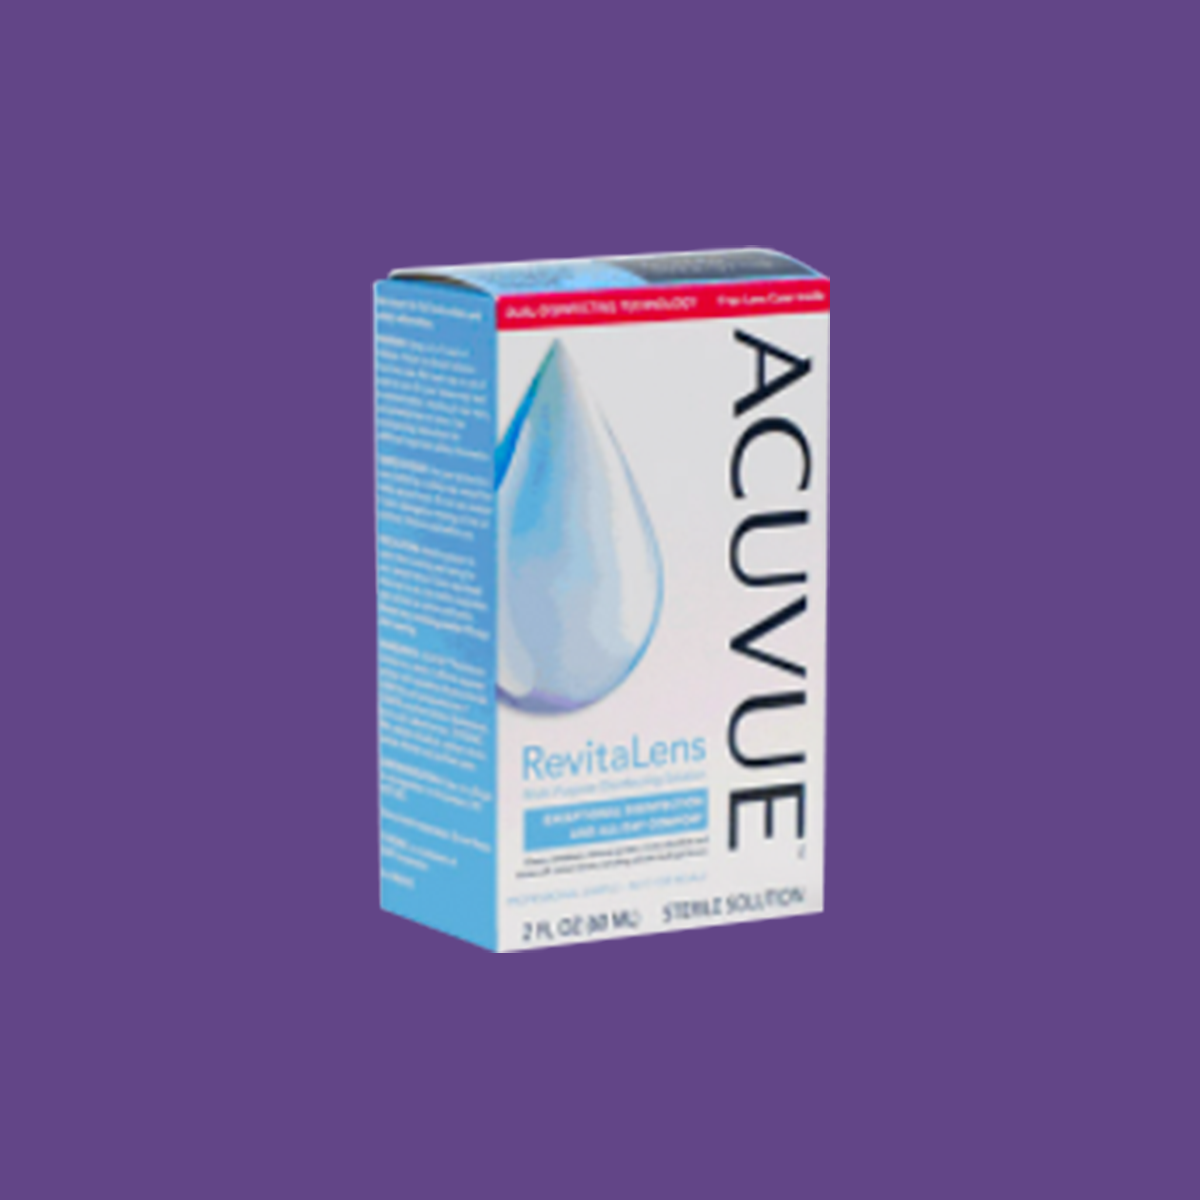 Acuvue RevitaLens Multi-Purpose Disinfecting Solution 2 oz - Travel - Doctor Sample